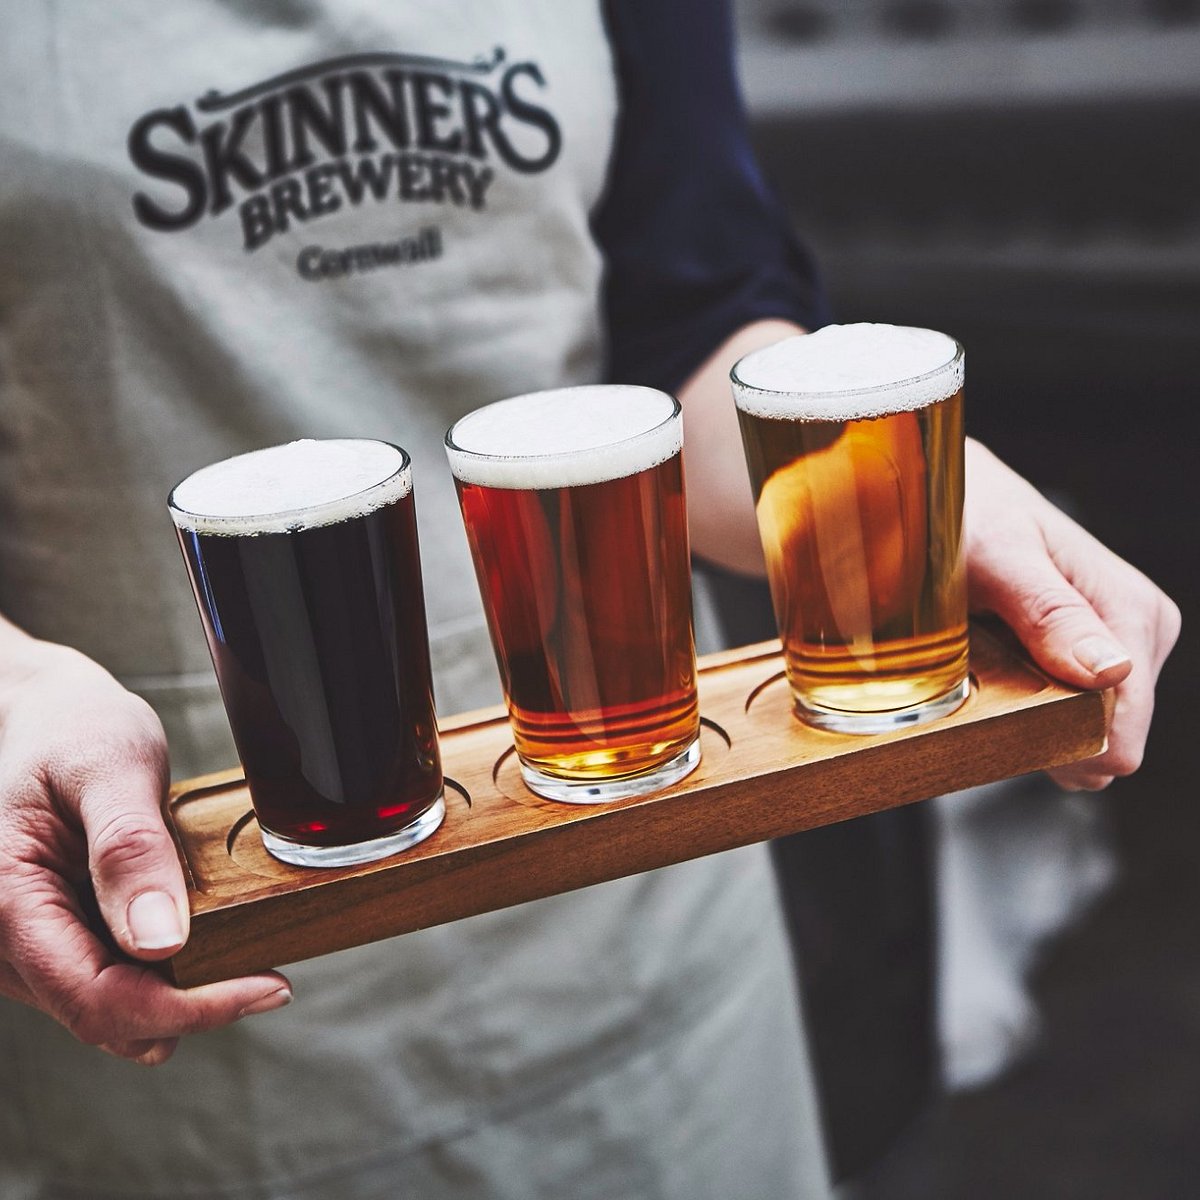 skinners brewery tour truro